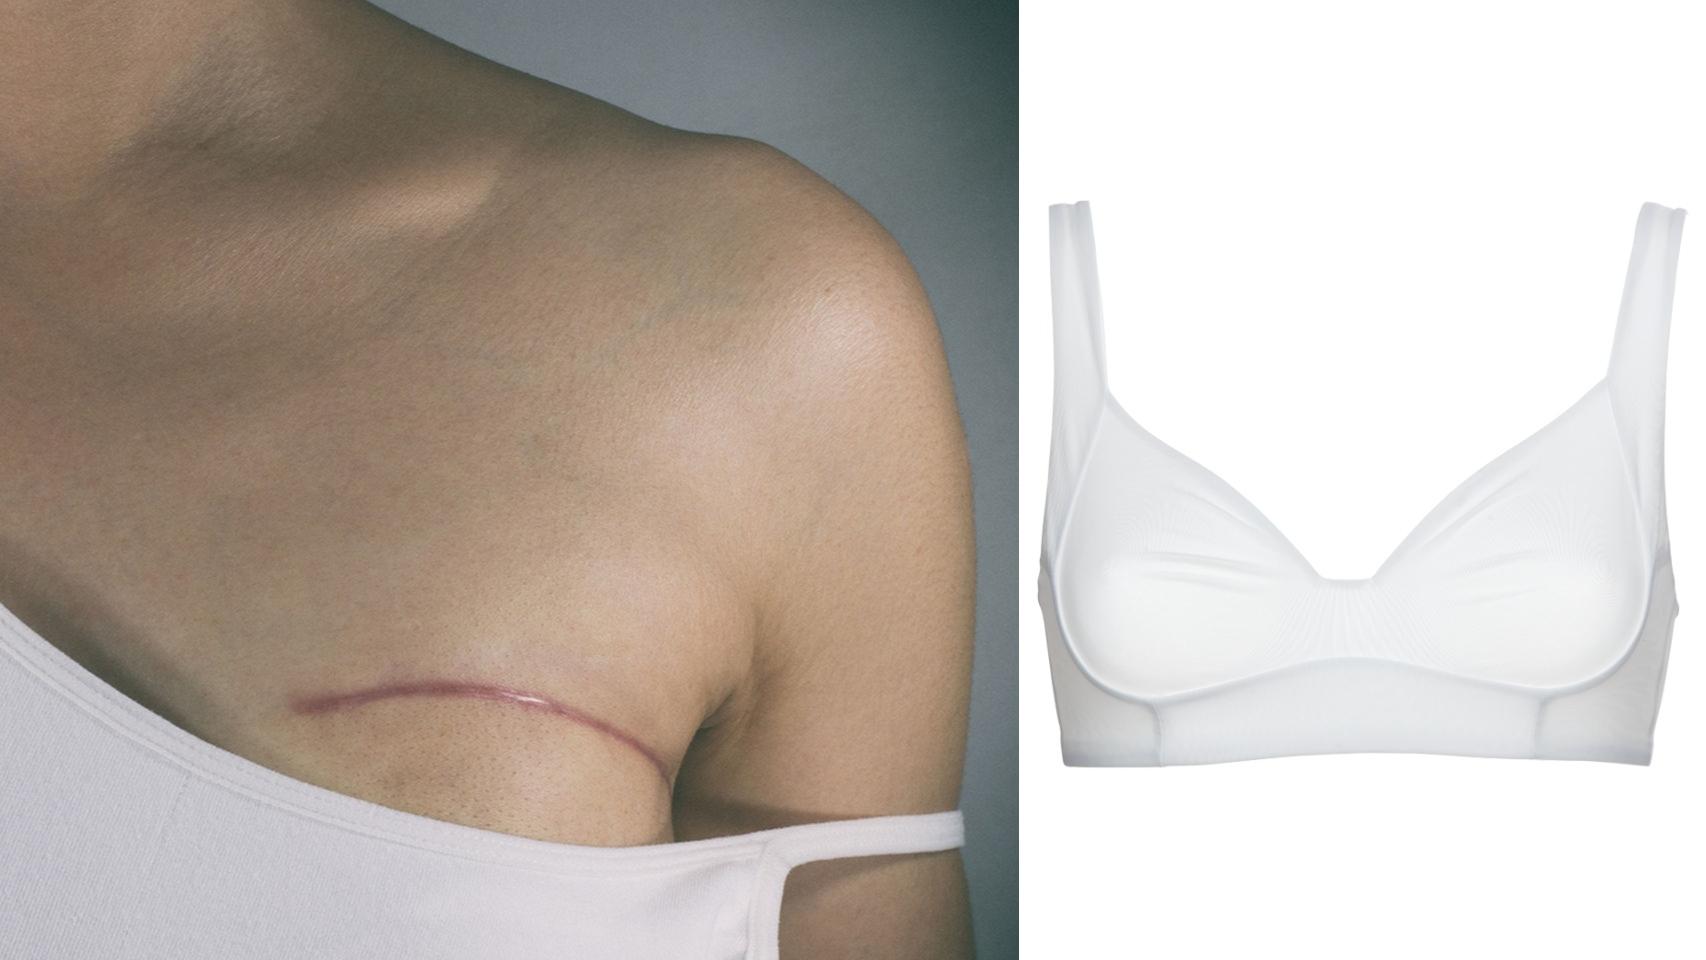 Cáncer mama: 'Innergy', así el sujetador antirroces ayuda a mujeres operadas de cáncer a